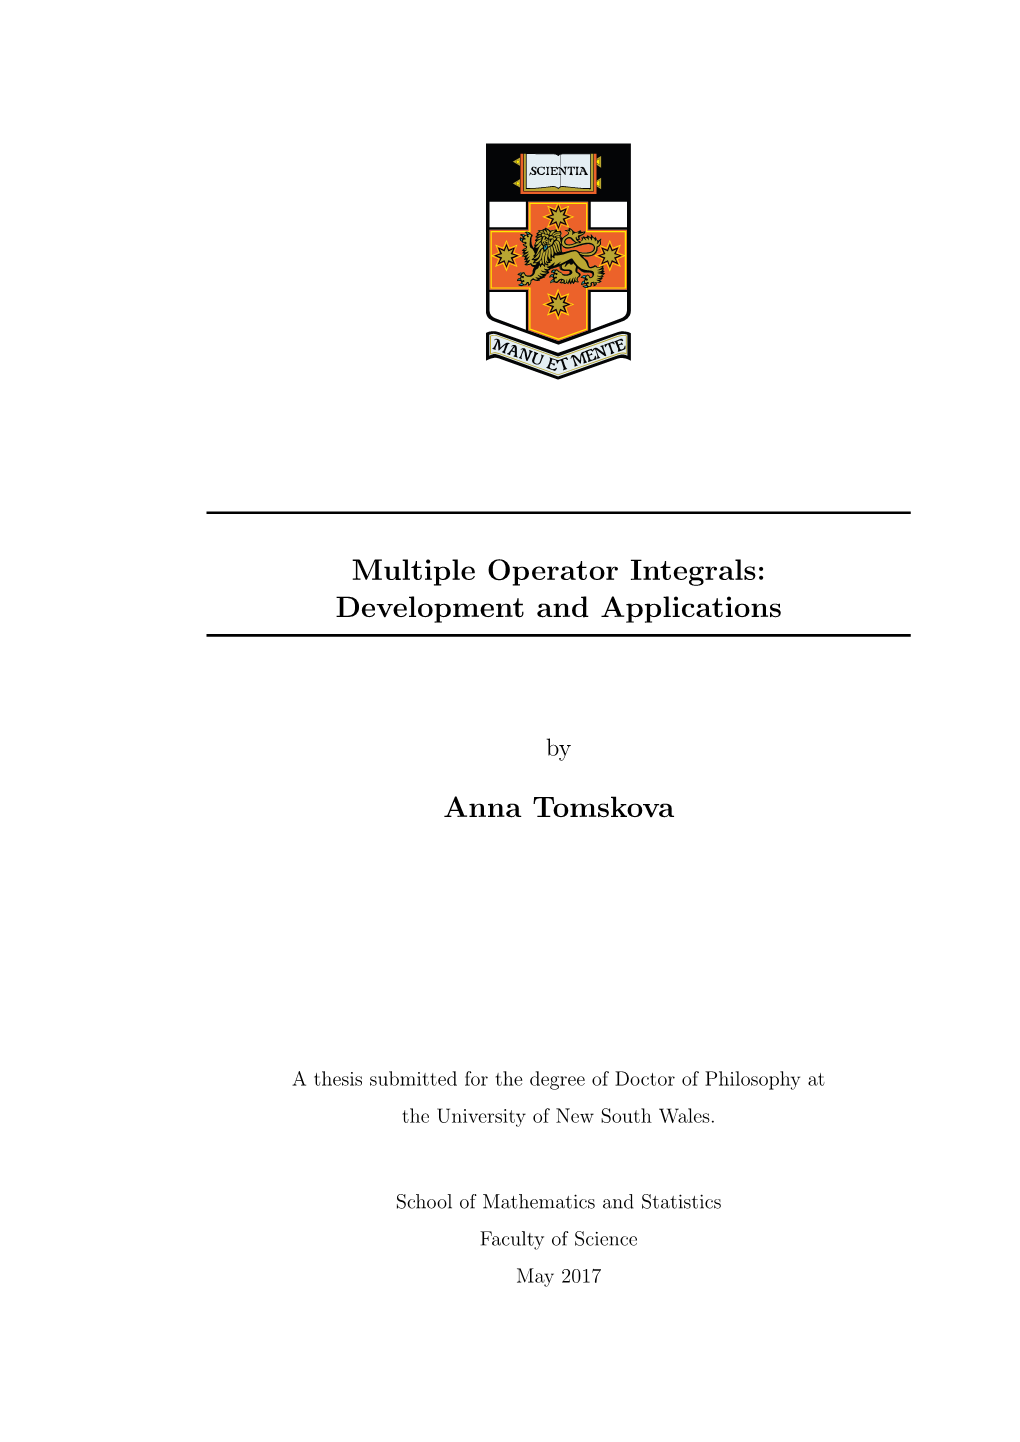 Multiple Operator Integrals: Development and Applications